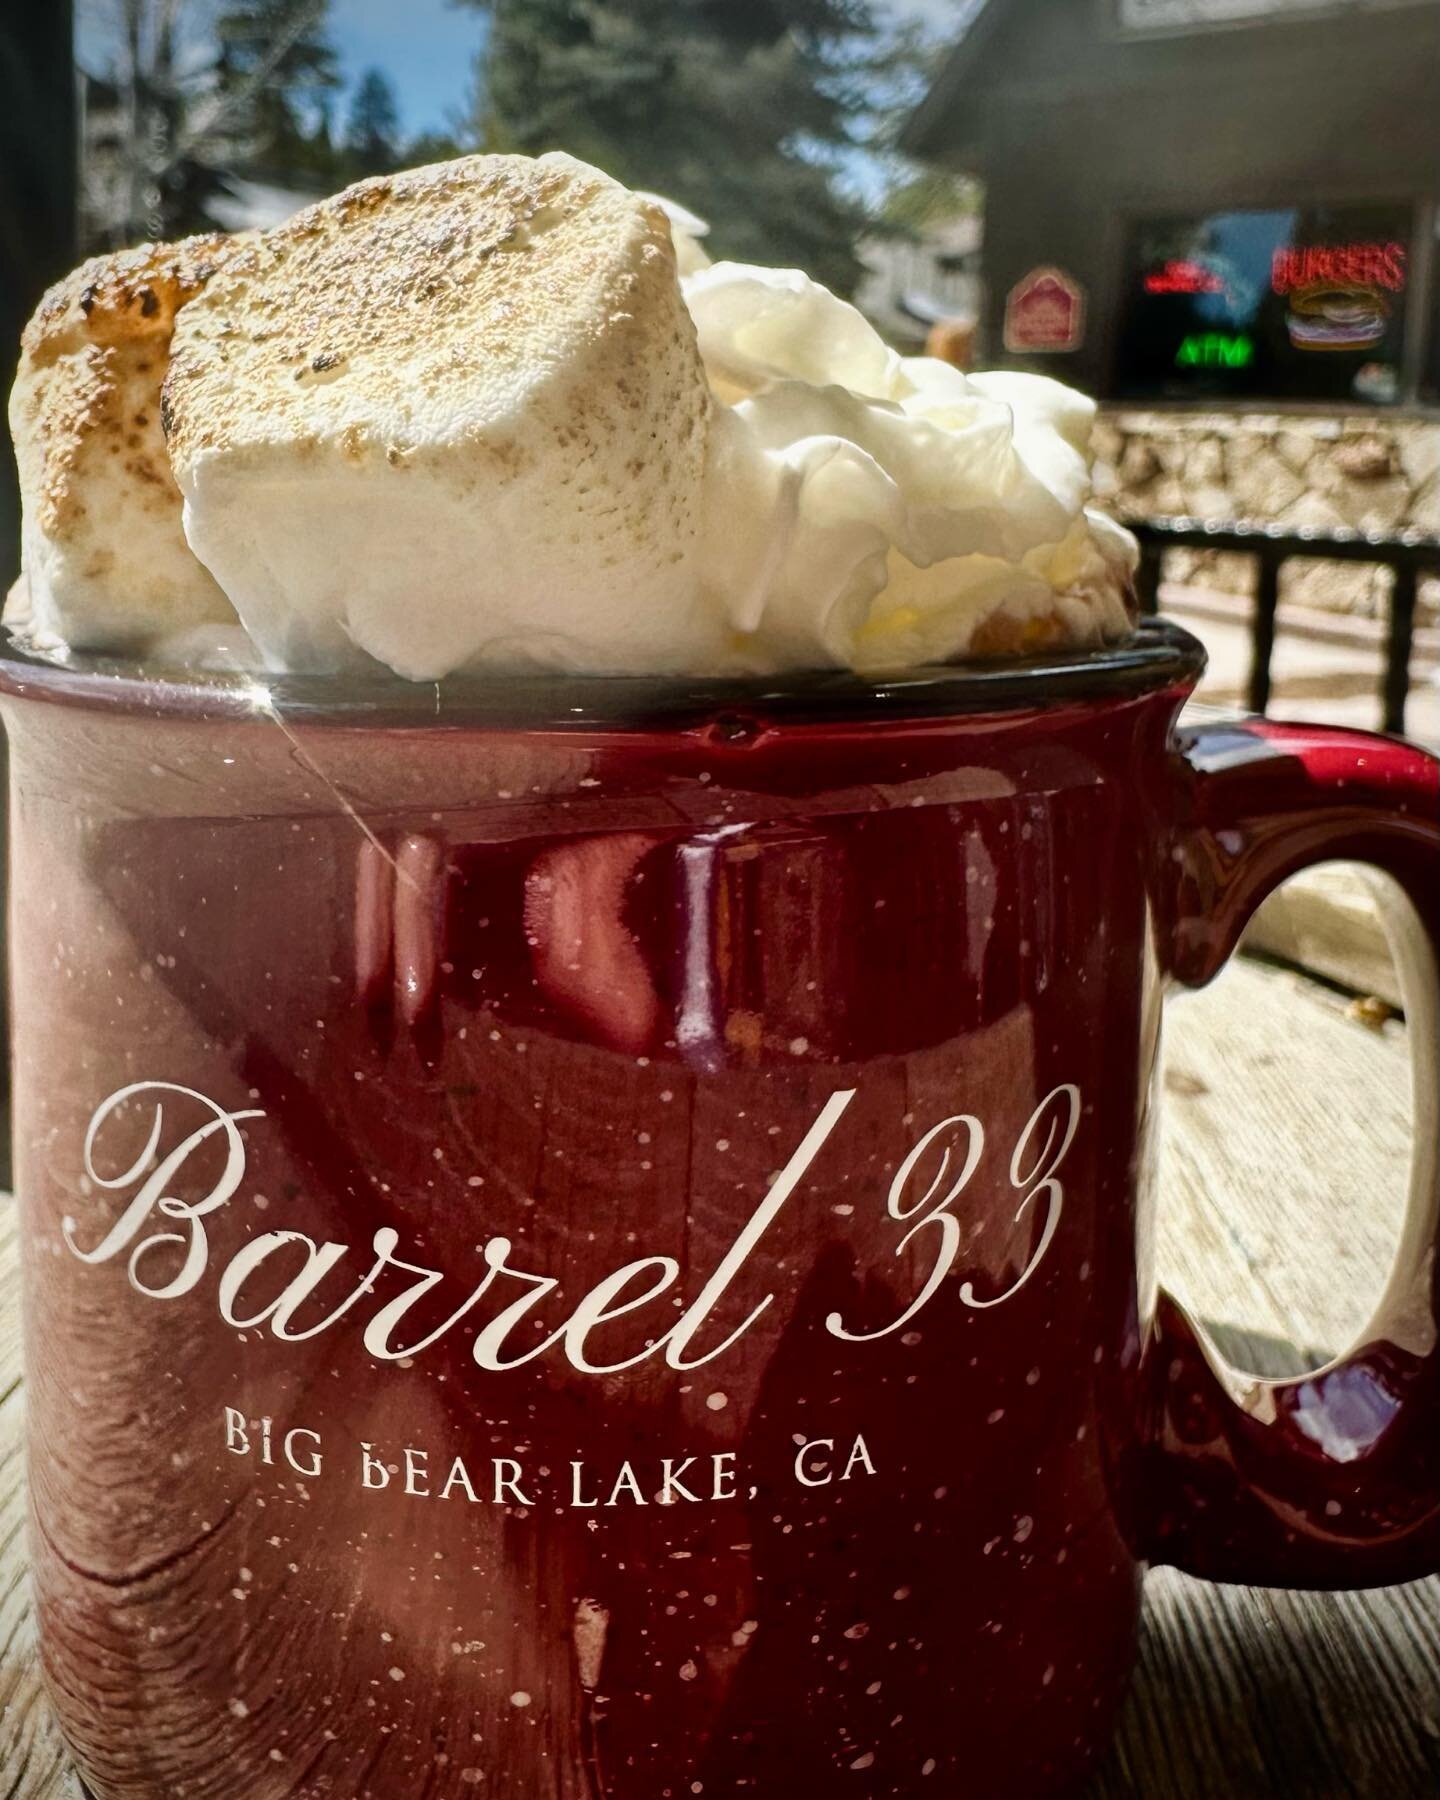 come cozy up with a hot chocolate @barrel33bigbear ☃️ #BigBearLake